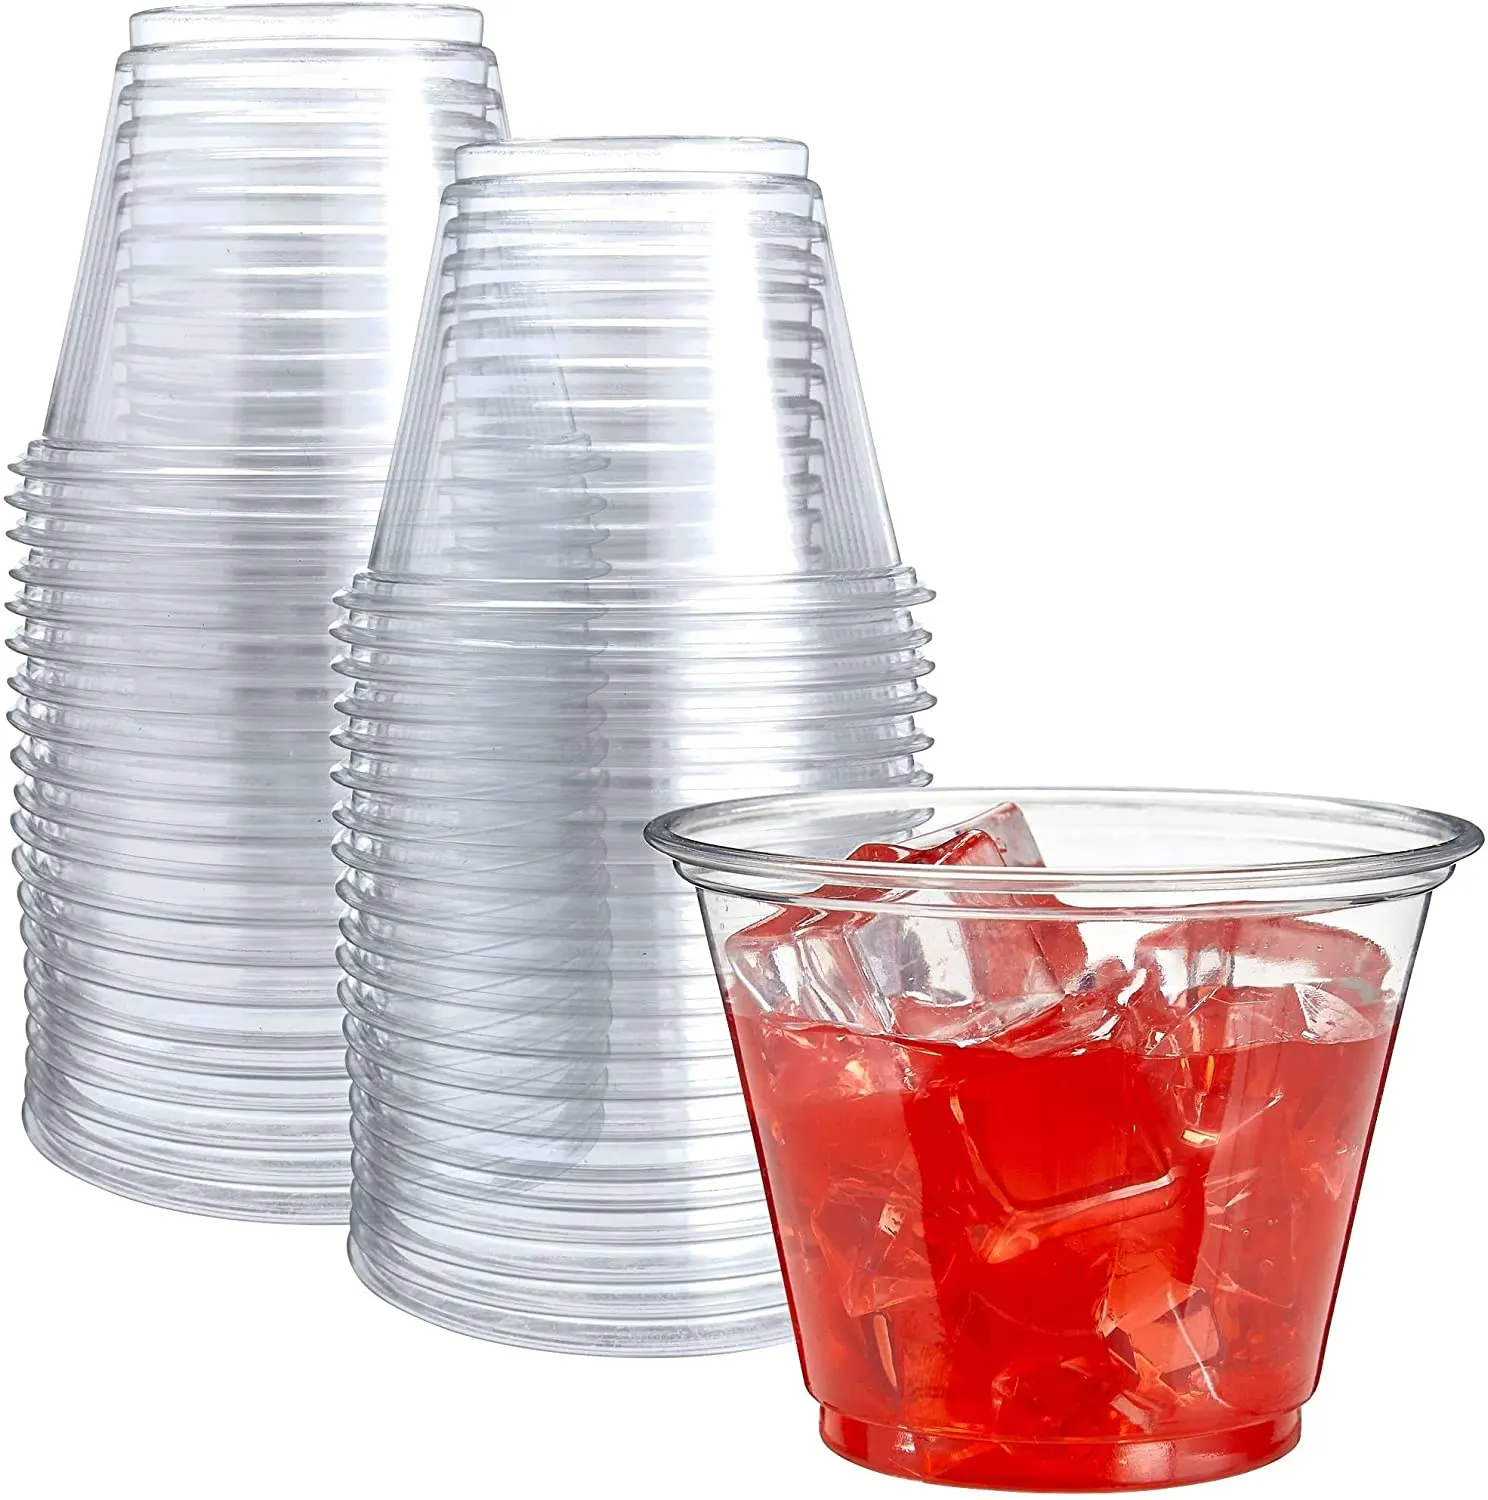  9 oz Plastic Cups
